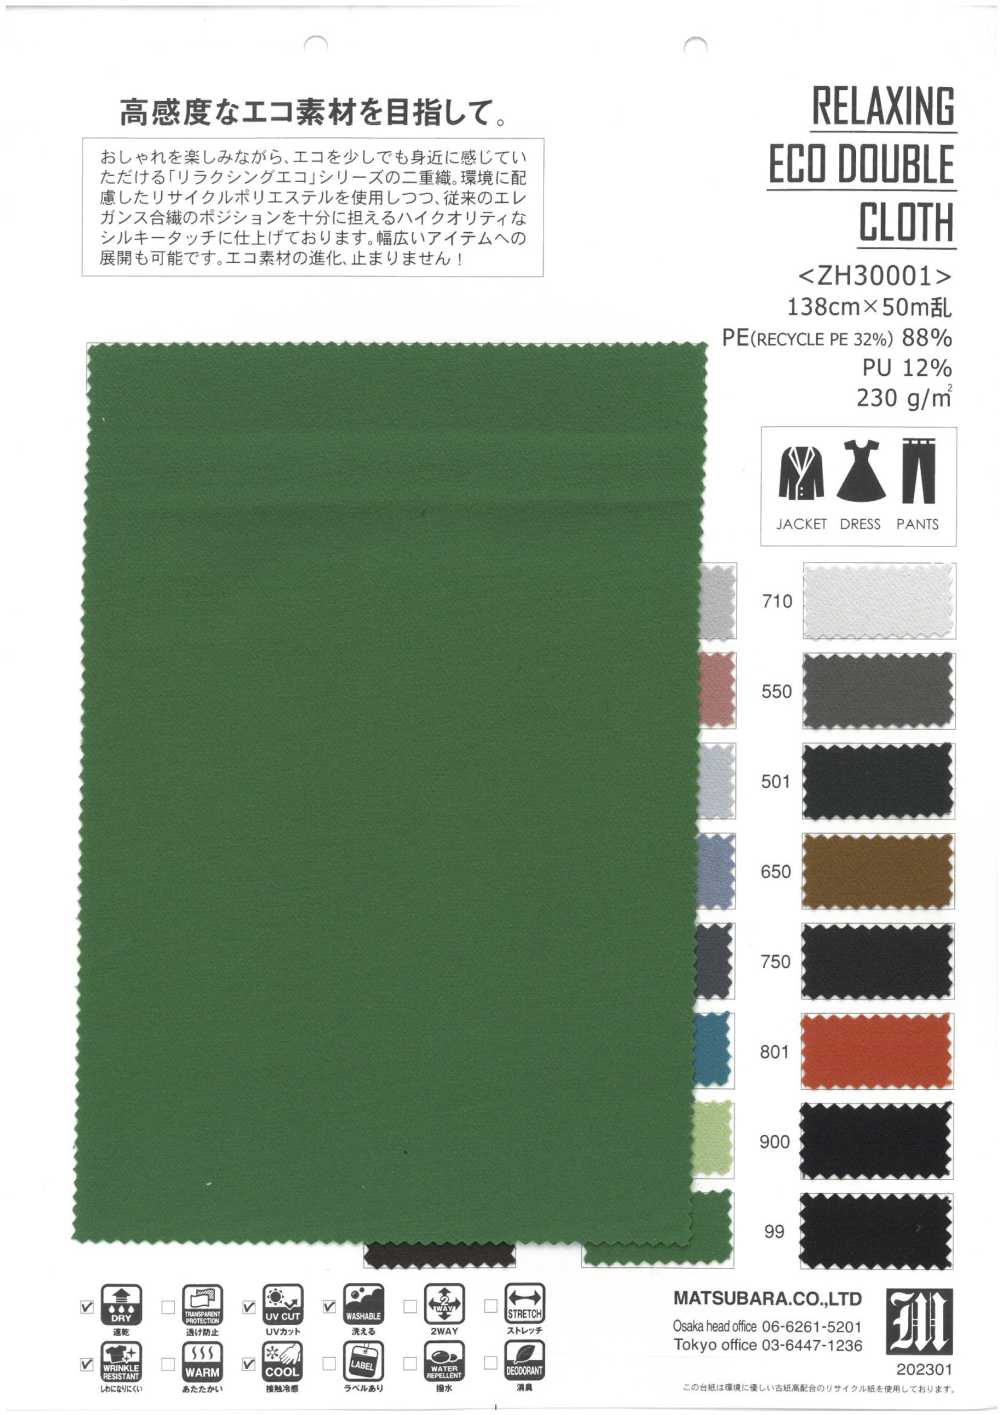 ZH30001 ENTSPANNENDES ECO-DOPPELTUCH[Textilgewebe] Matsubara